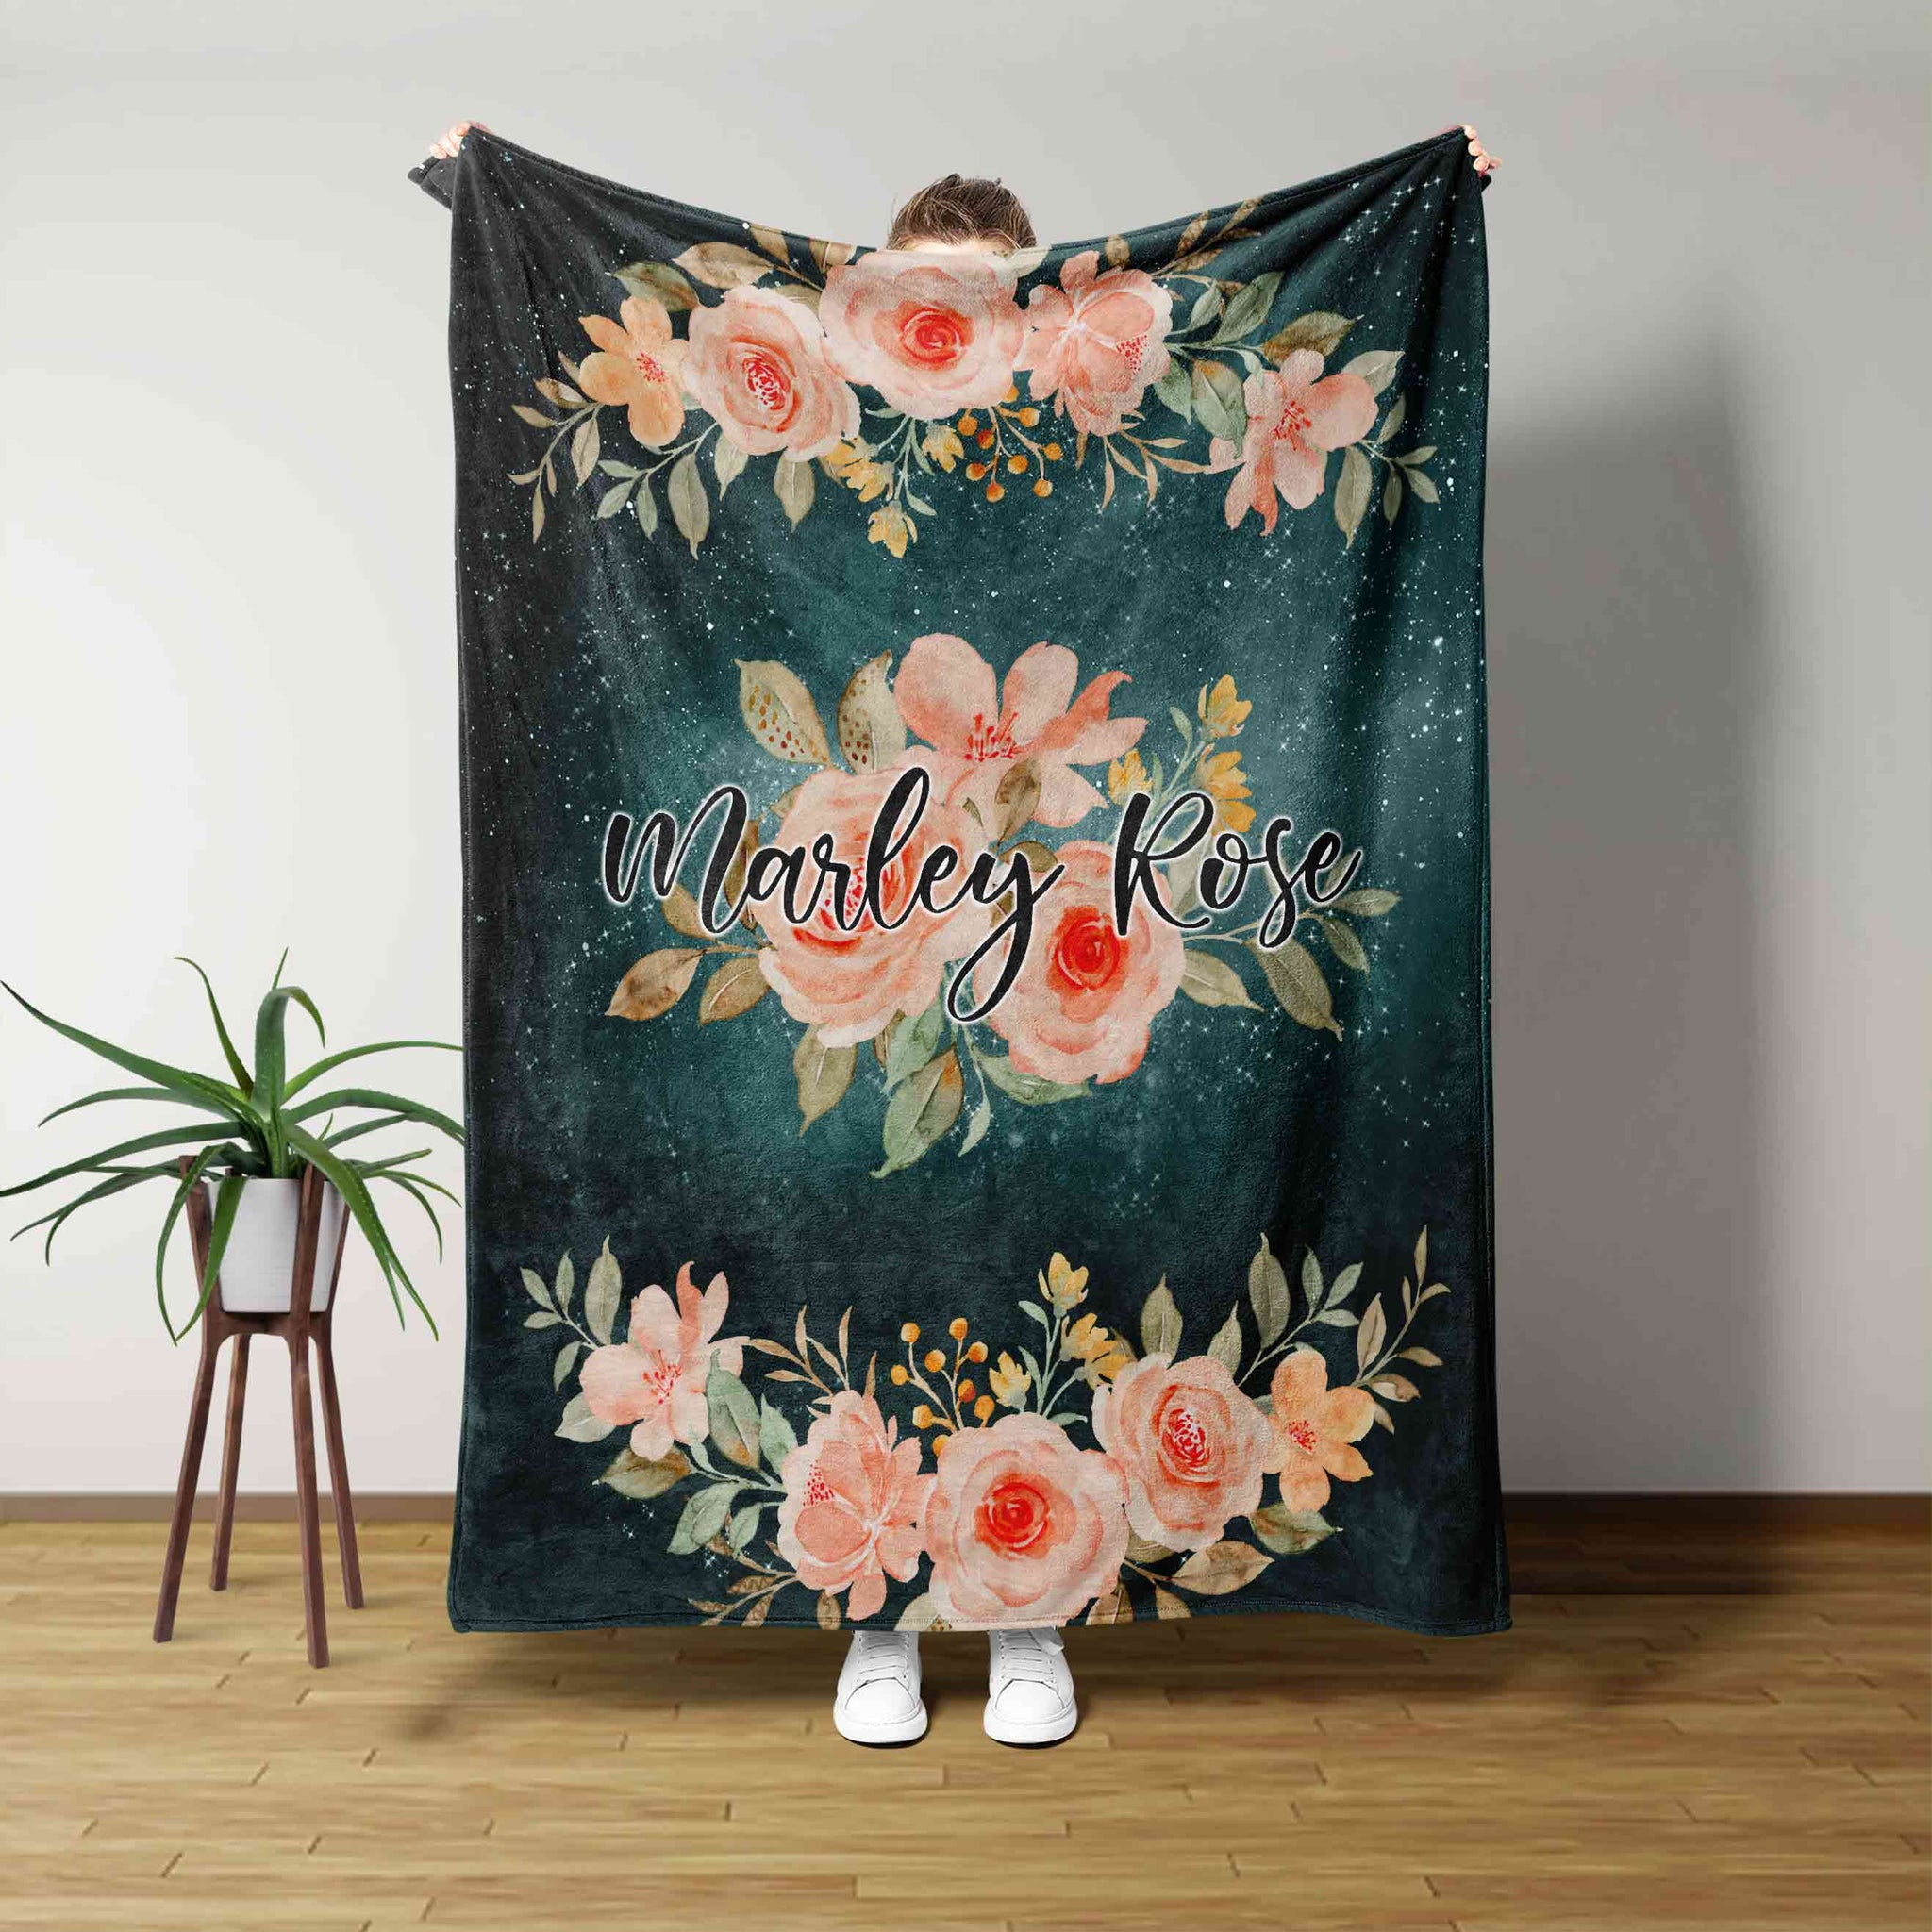 Personalized Name Blanket, Rose Blanket, Flower Blanket, Baby Blanket, Blanket For Baby